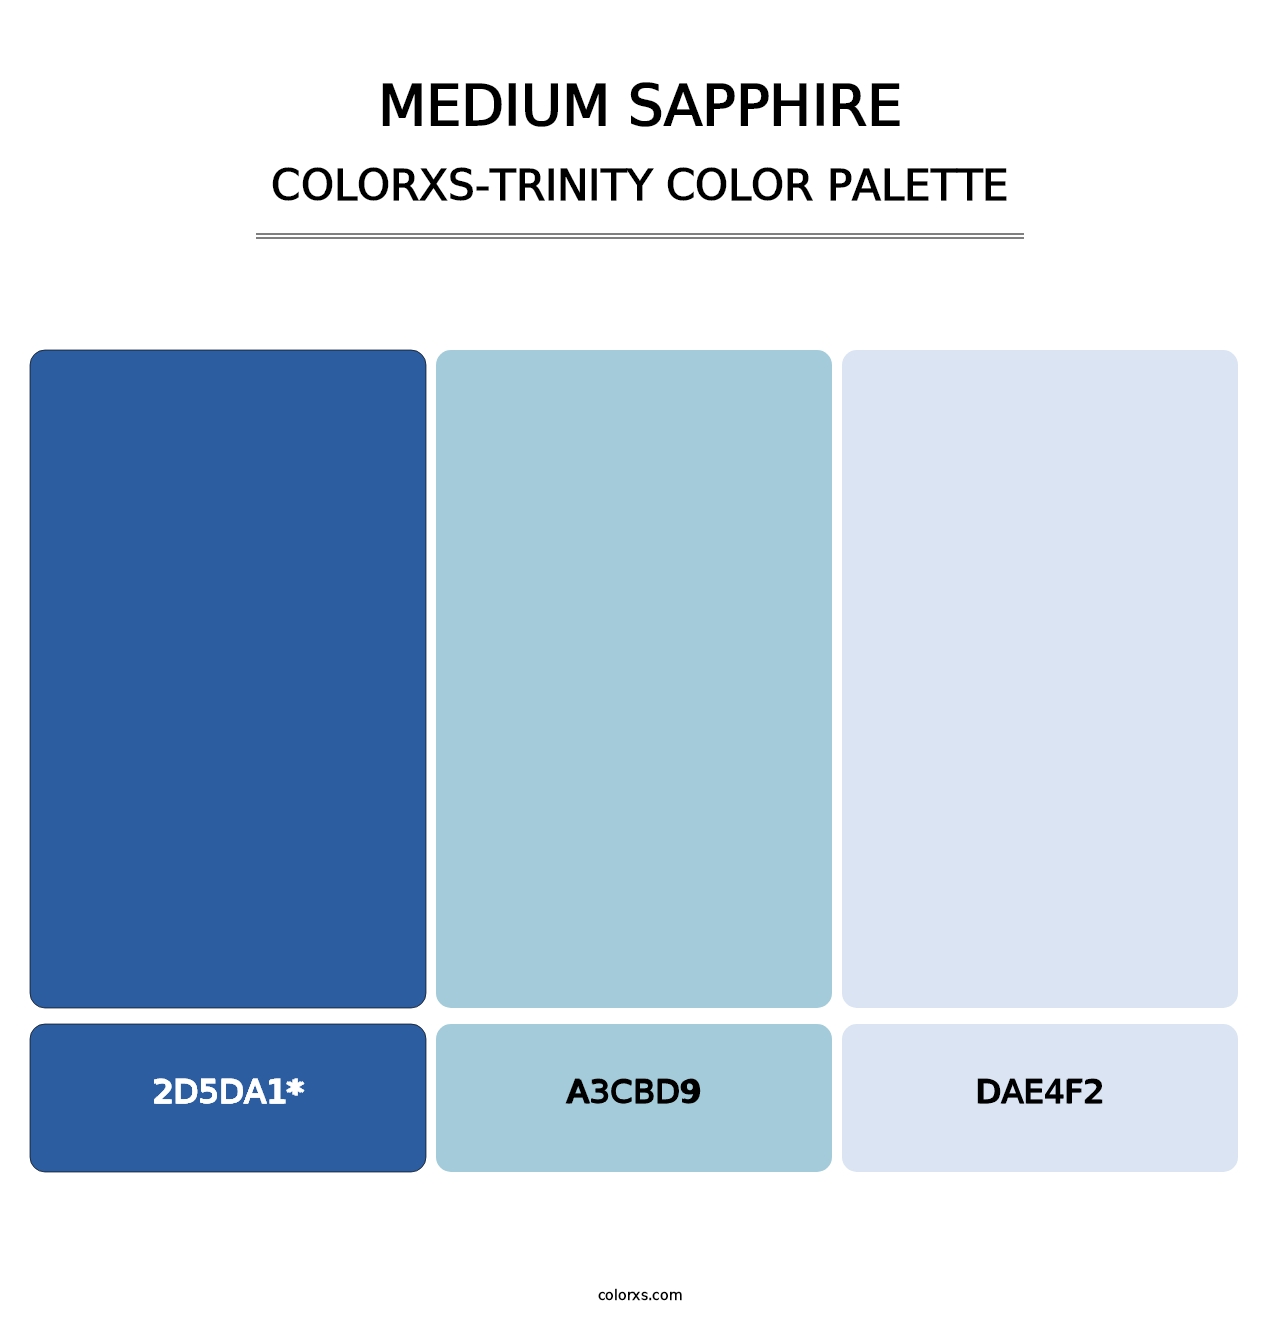 Medium Sapphire - Colorxs Trinity Palette